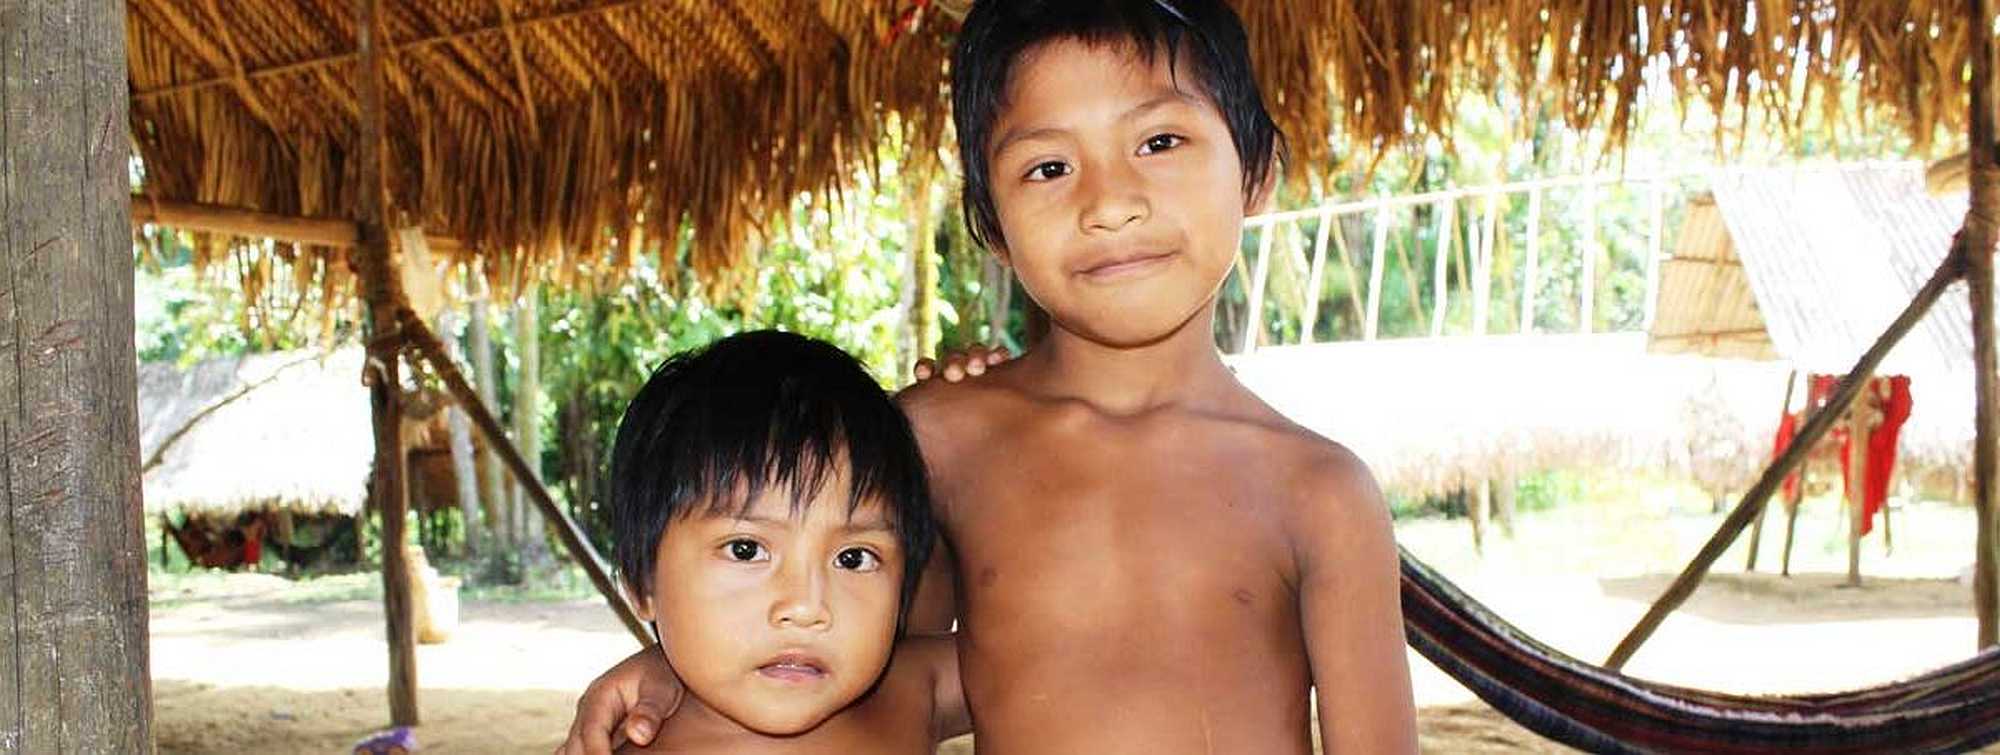 Waiãpi indigenous children in Amapá state, Brazil. Image by Sam Cowie/Mongabay.